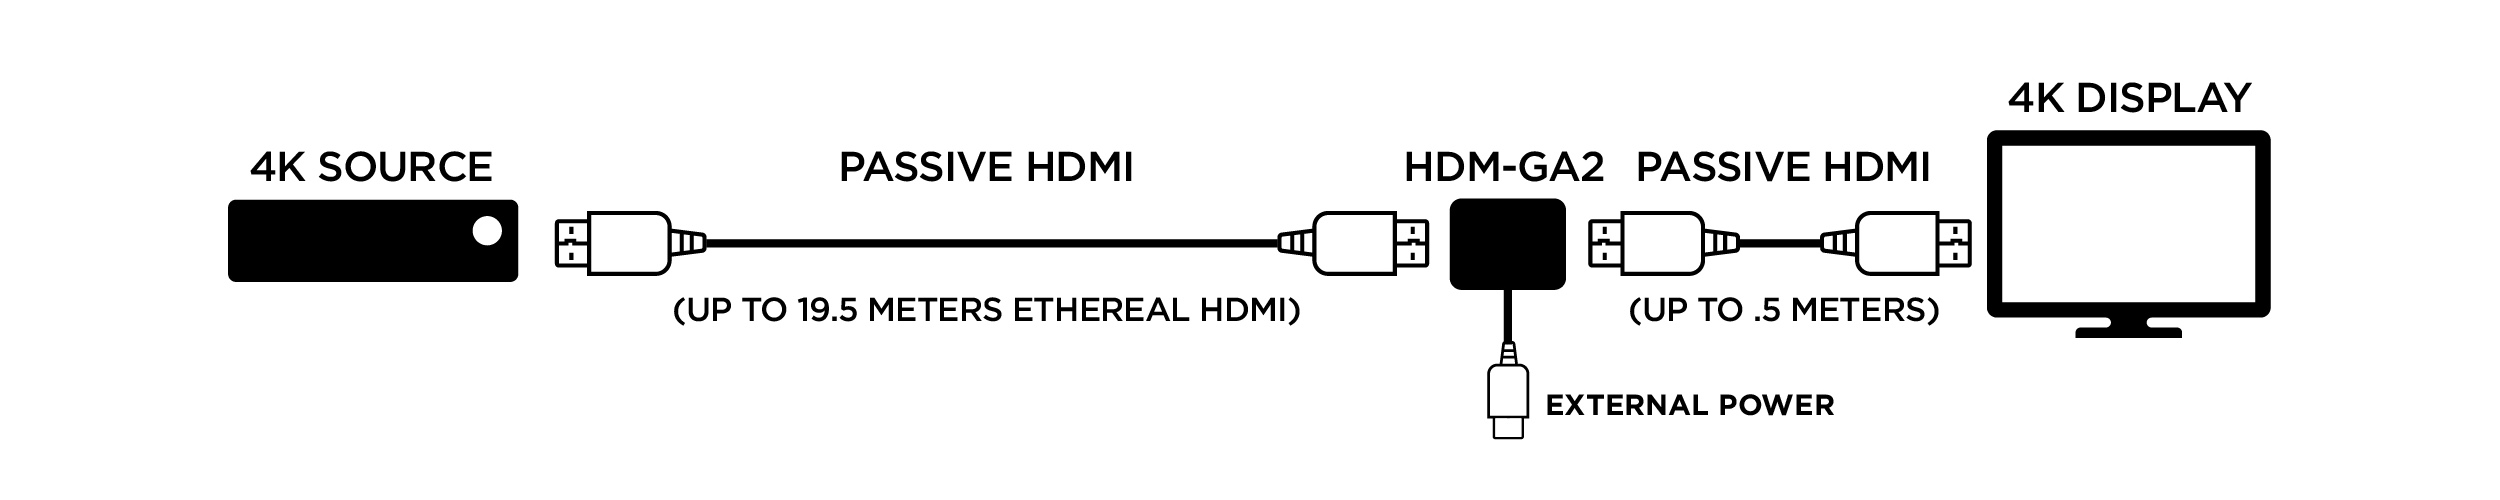 metrahtg-hdm-ga2-diagram